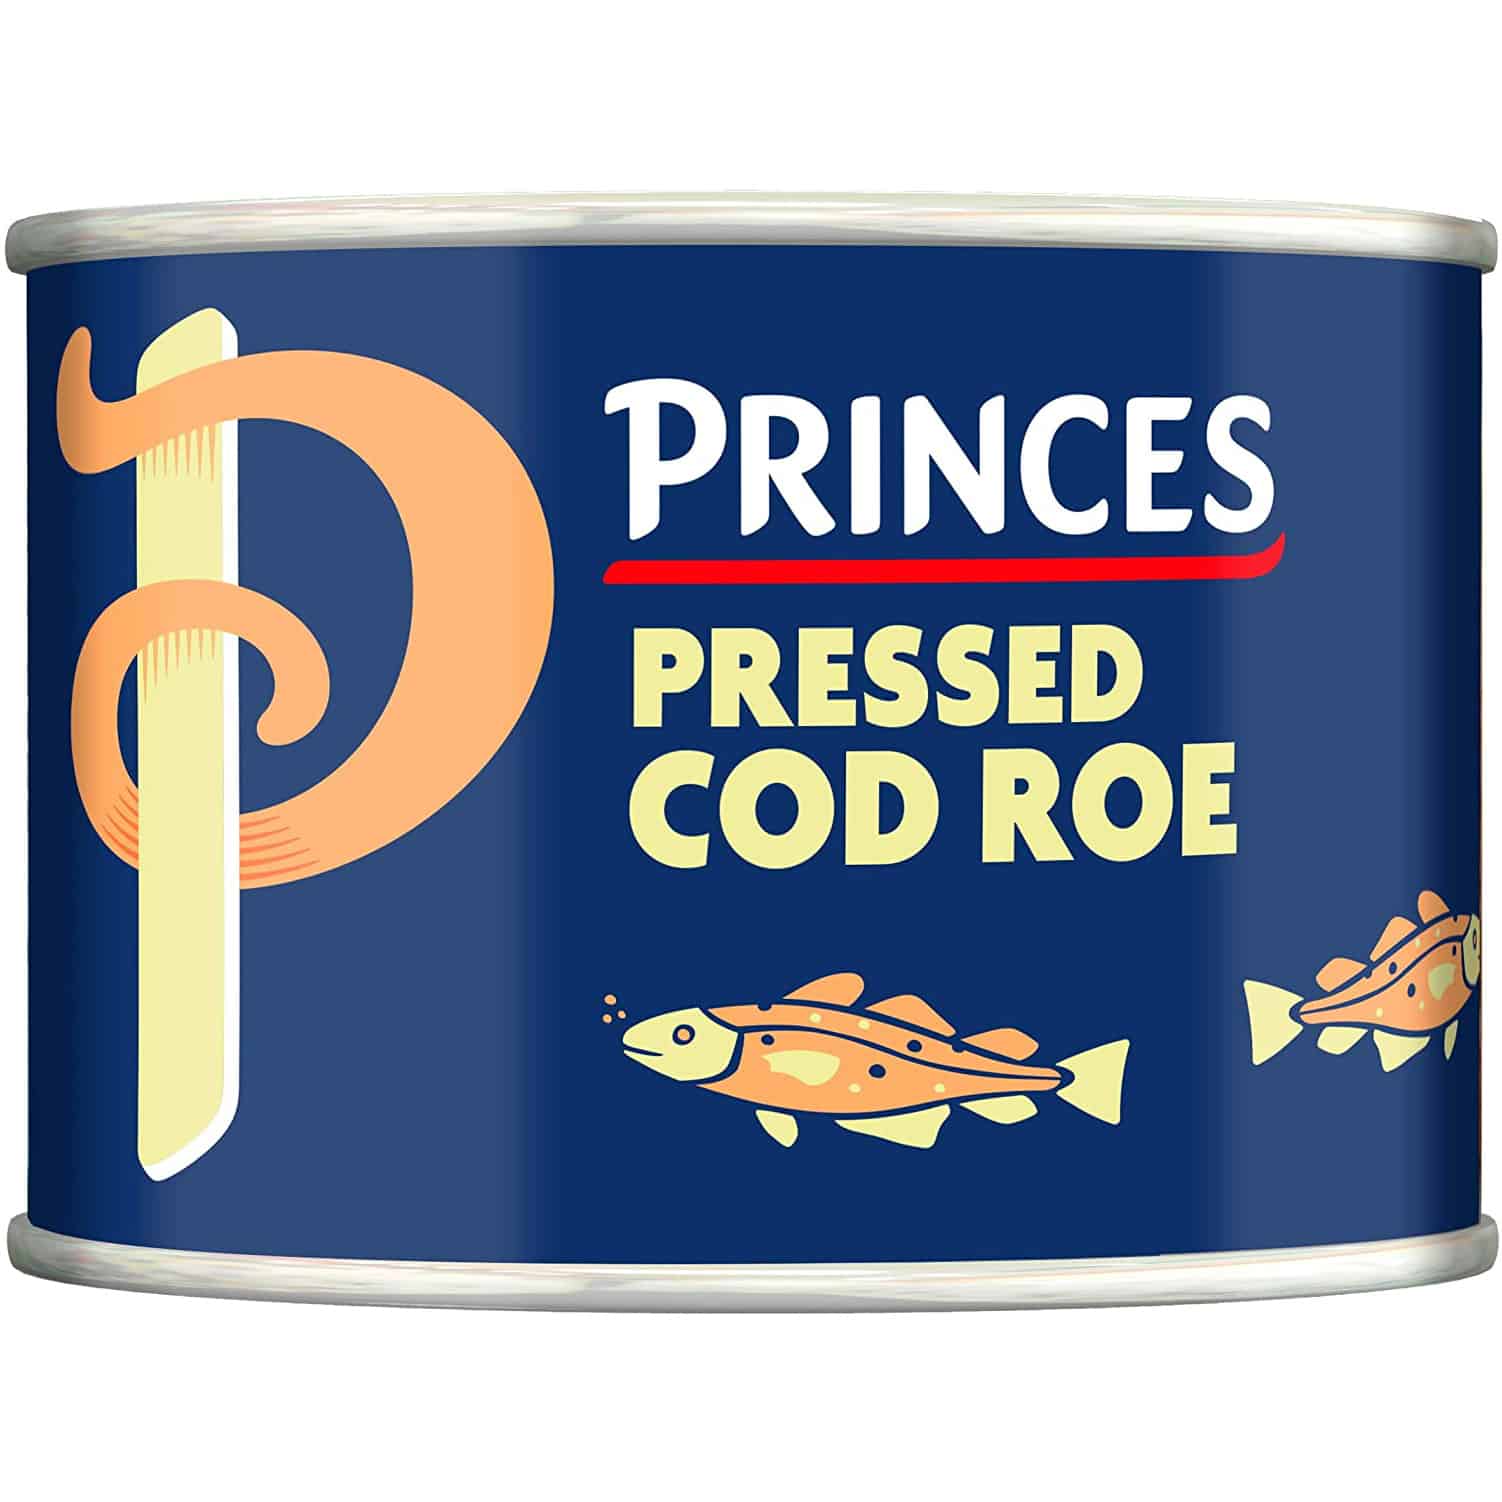 Princes Pressed Cod Roe 200g